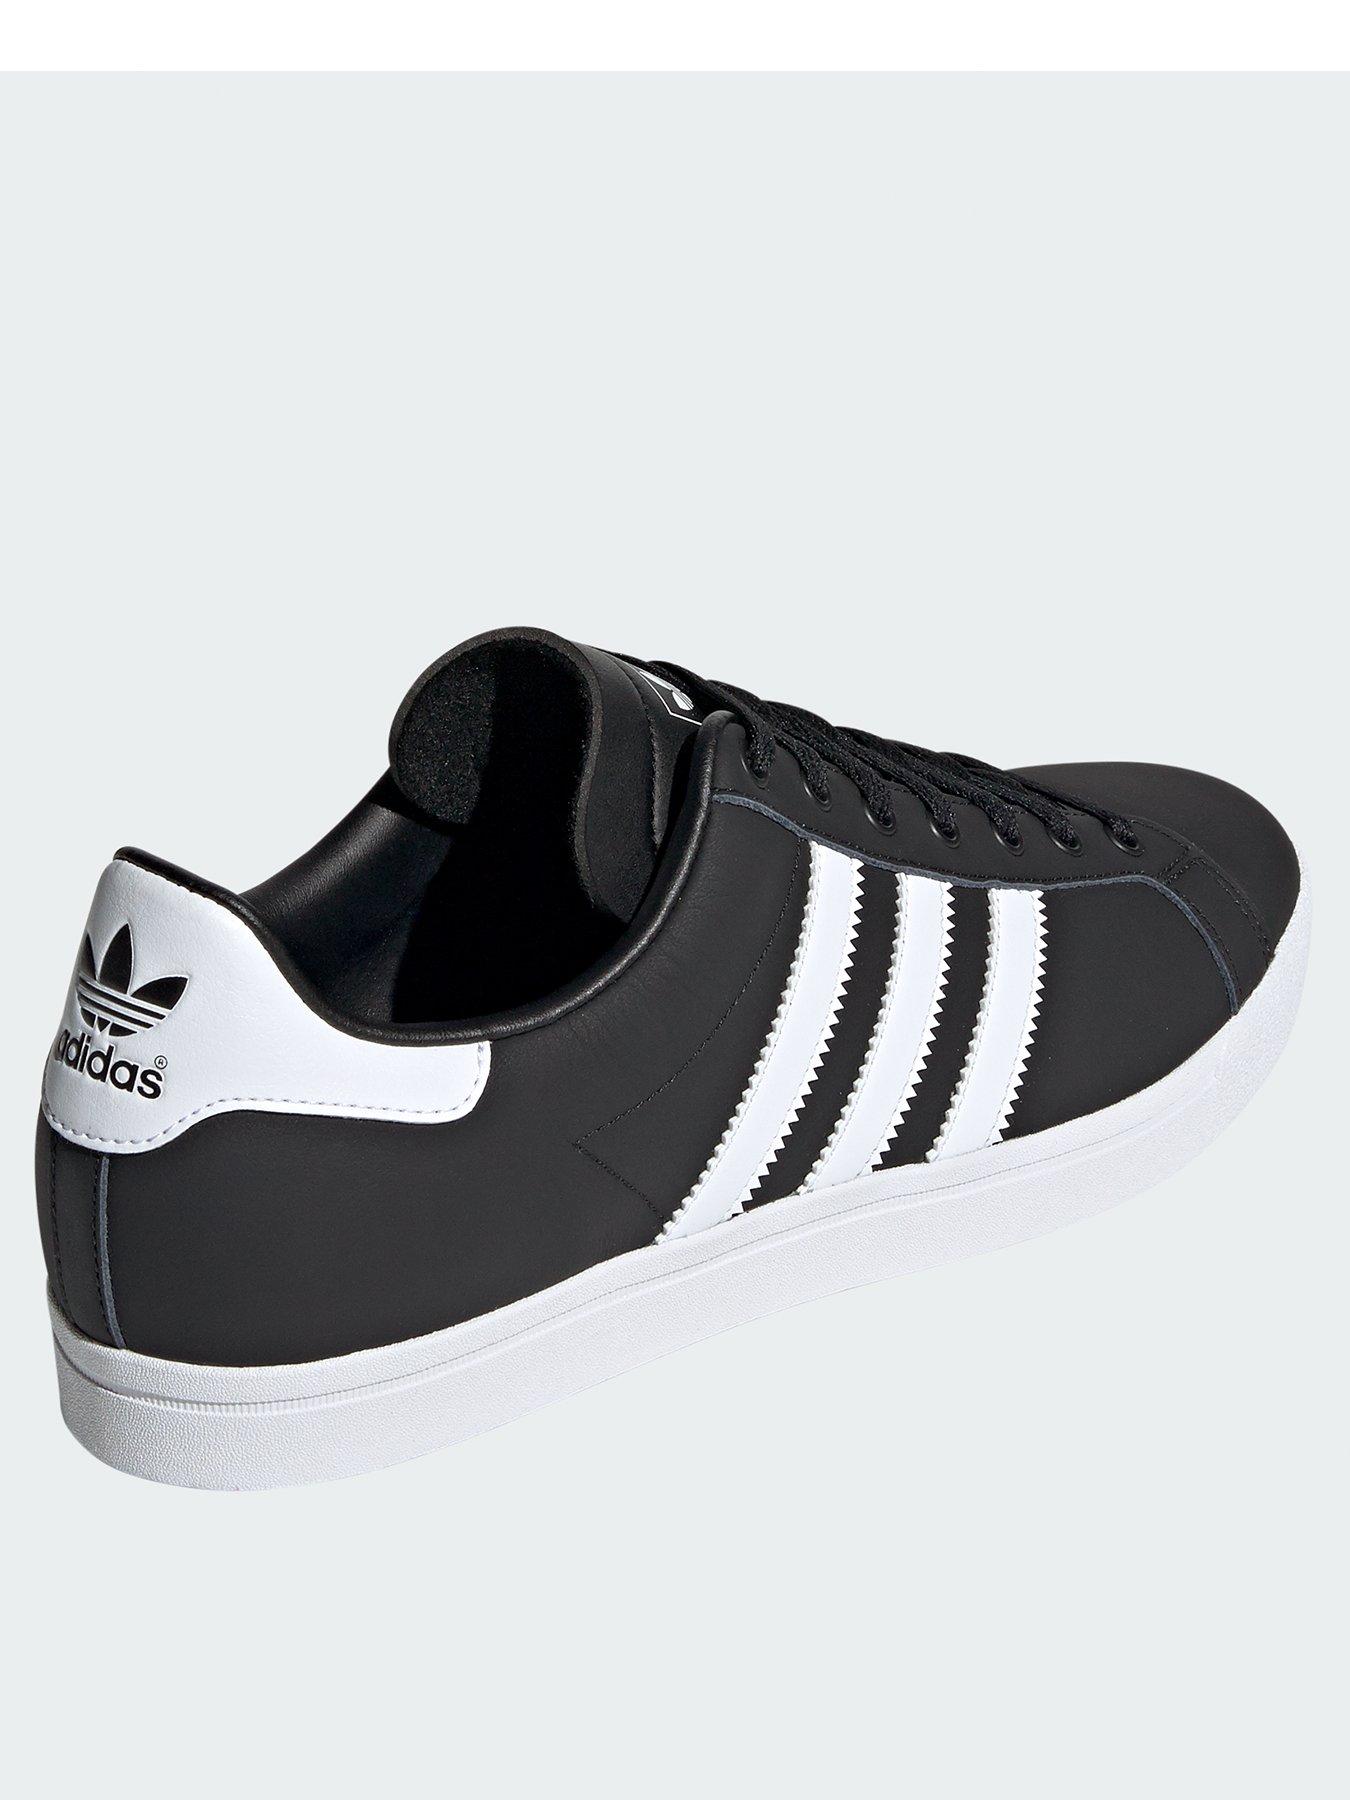 adidas coast star black and white